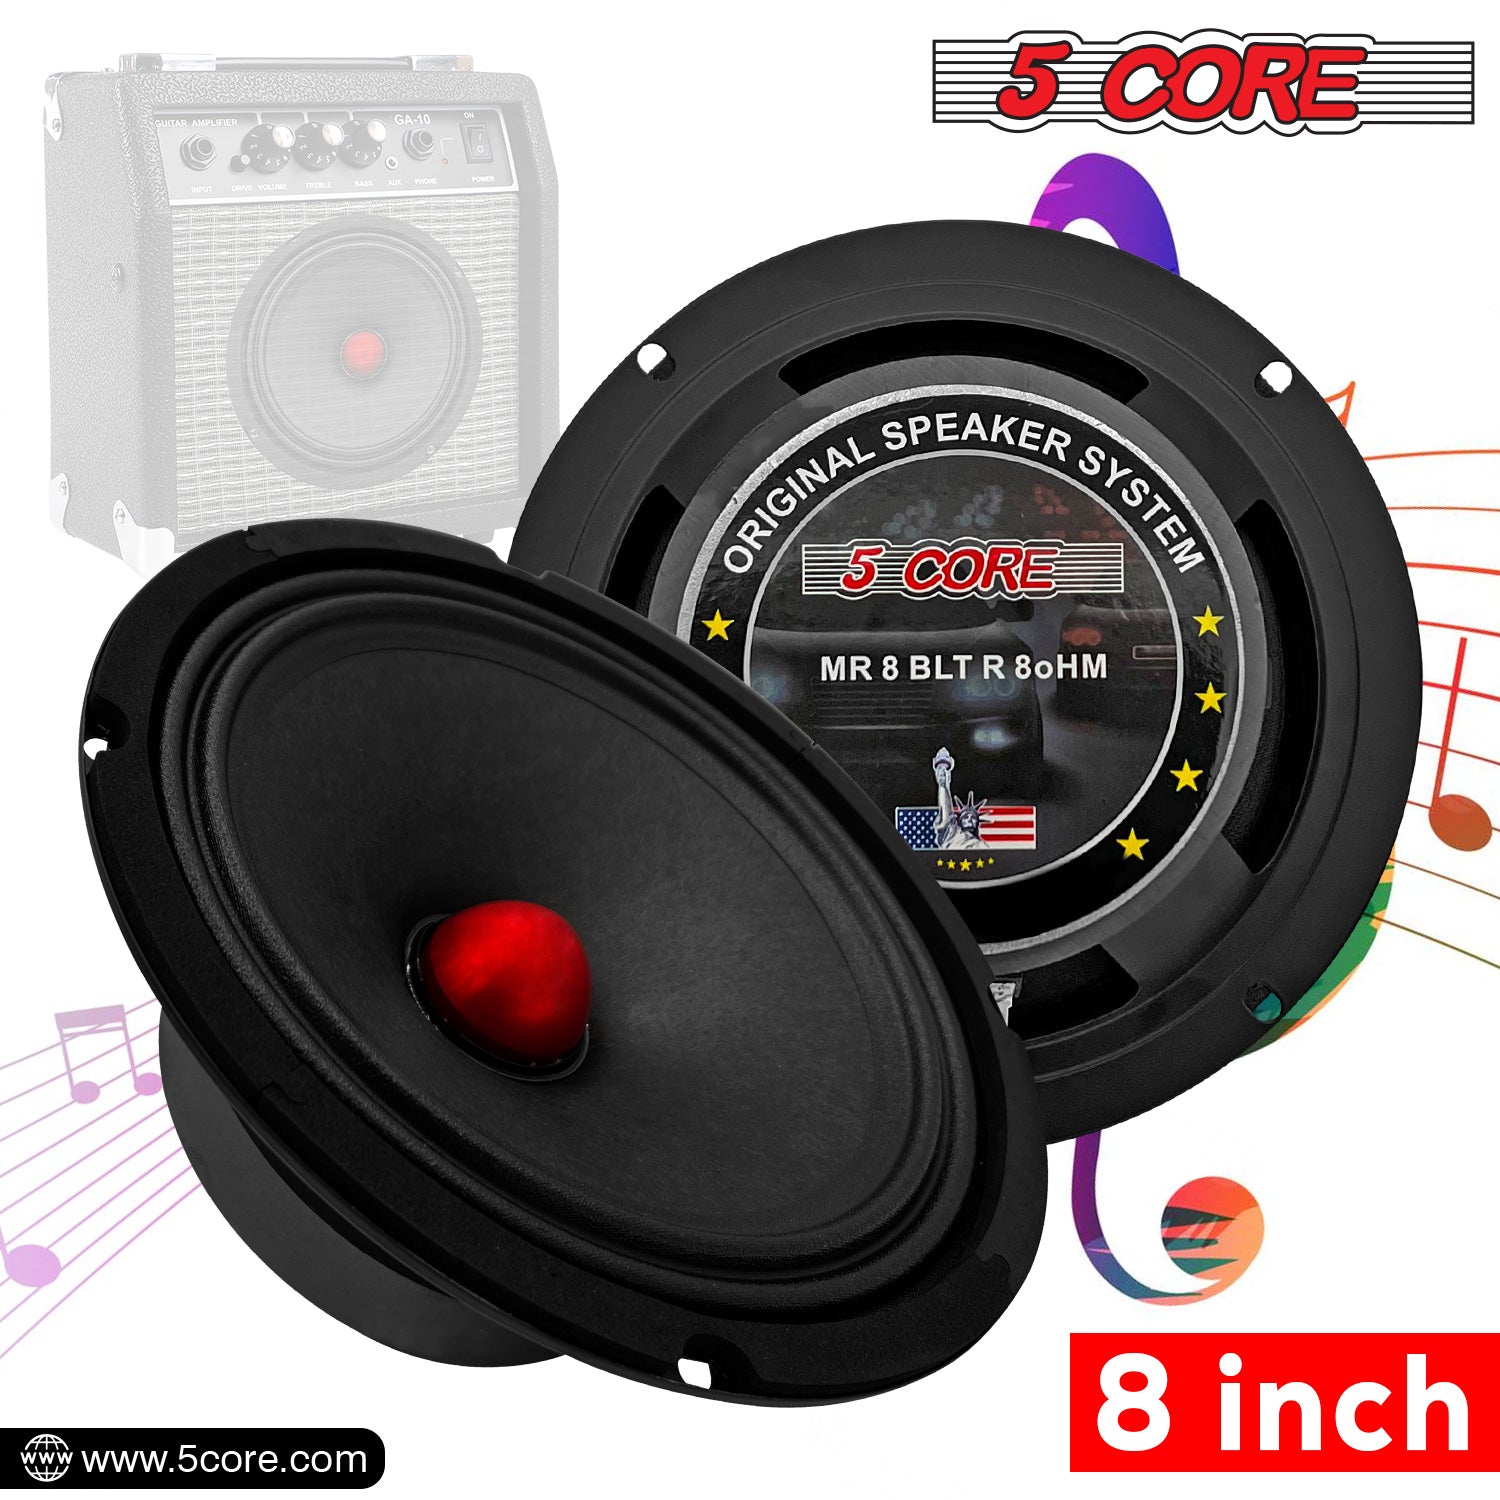 5 Core DJ Speakers 8 Inch 580W PMPO 8 Ohm Midrange Speakers Built in Super Bullet Tweeters PRO Audio Subwoofer - MR 8 BLT R 8oHM